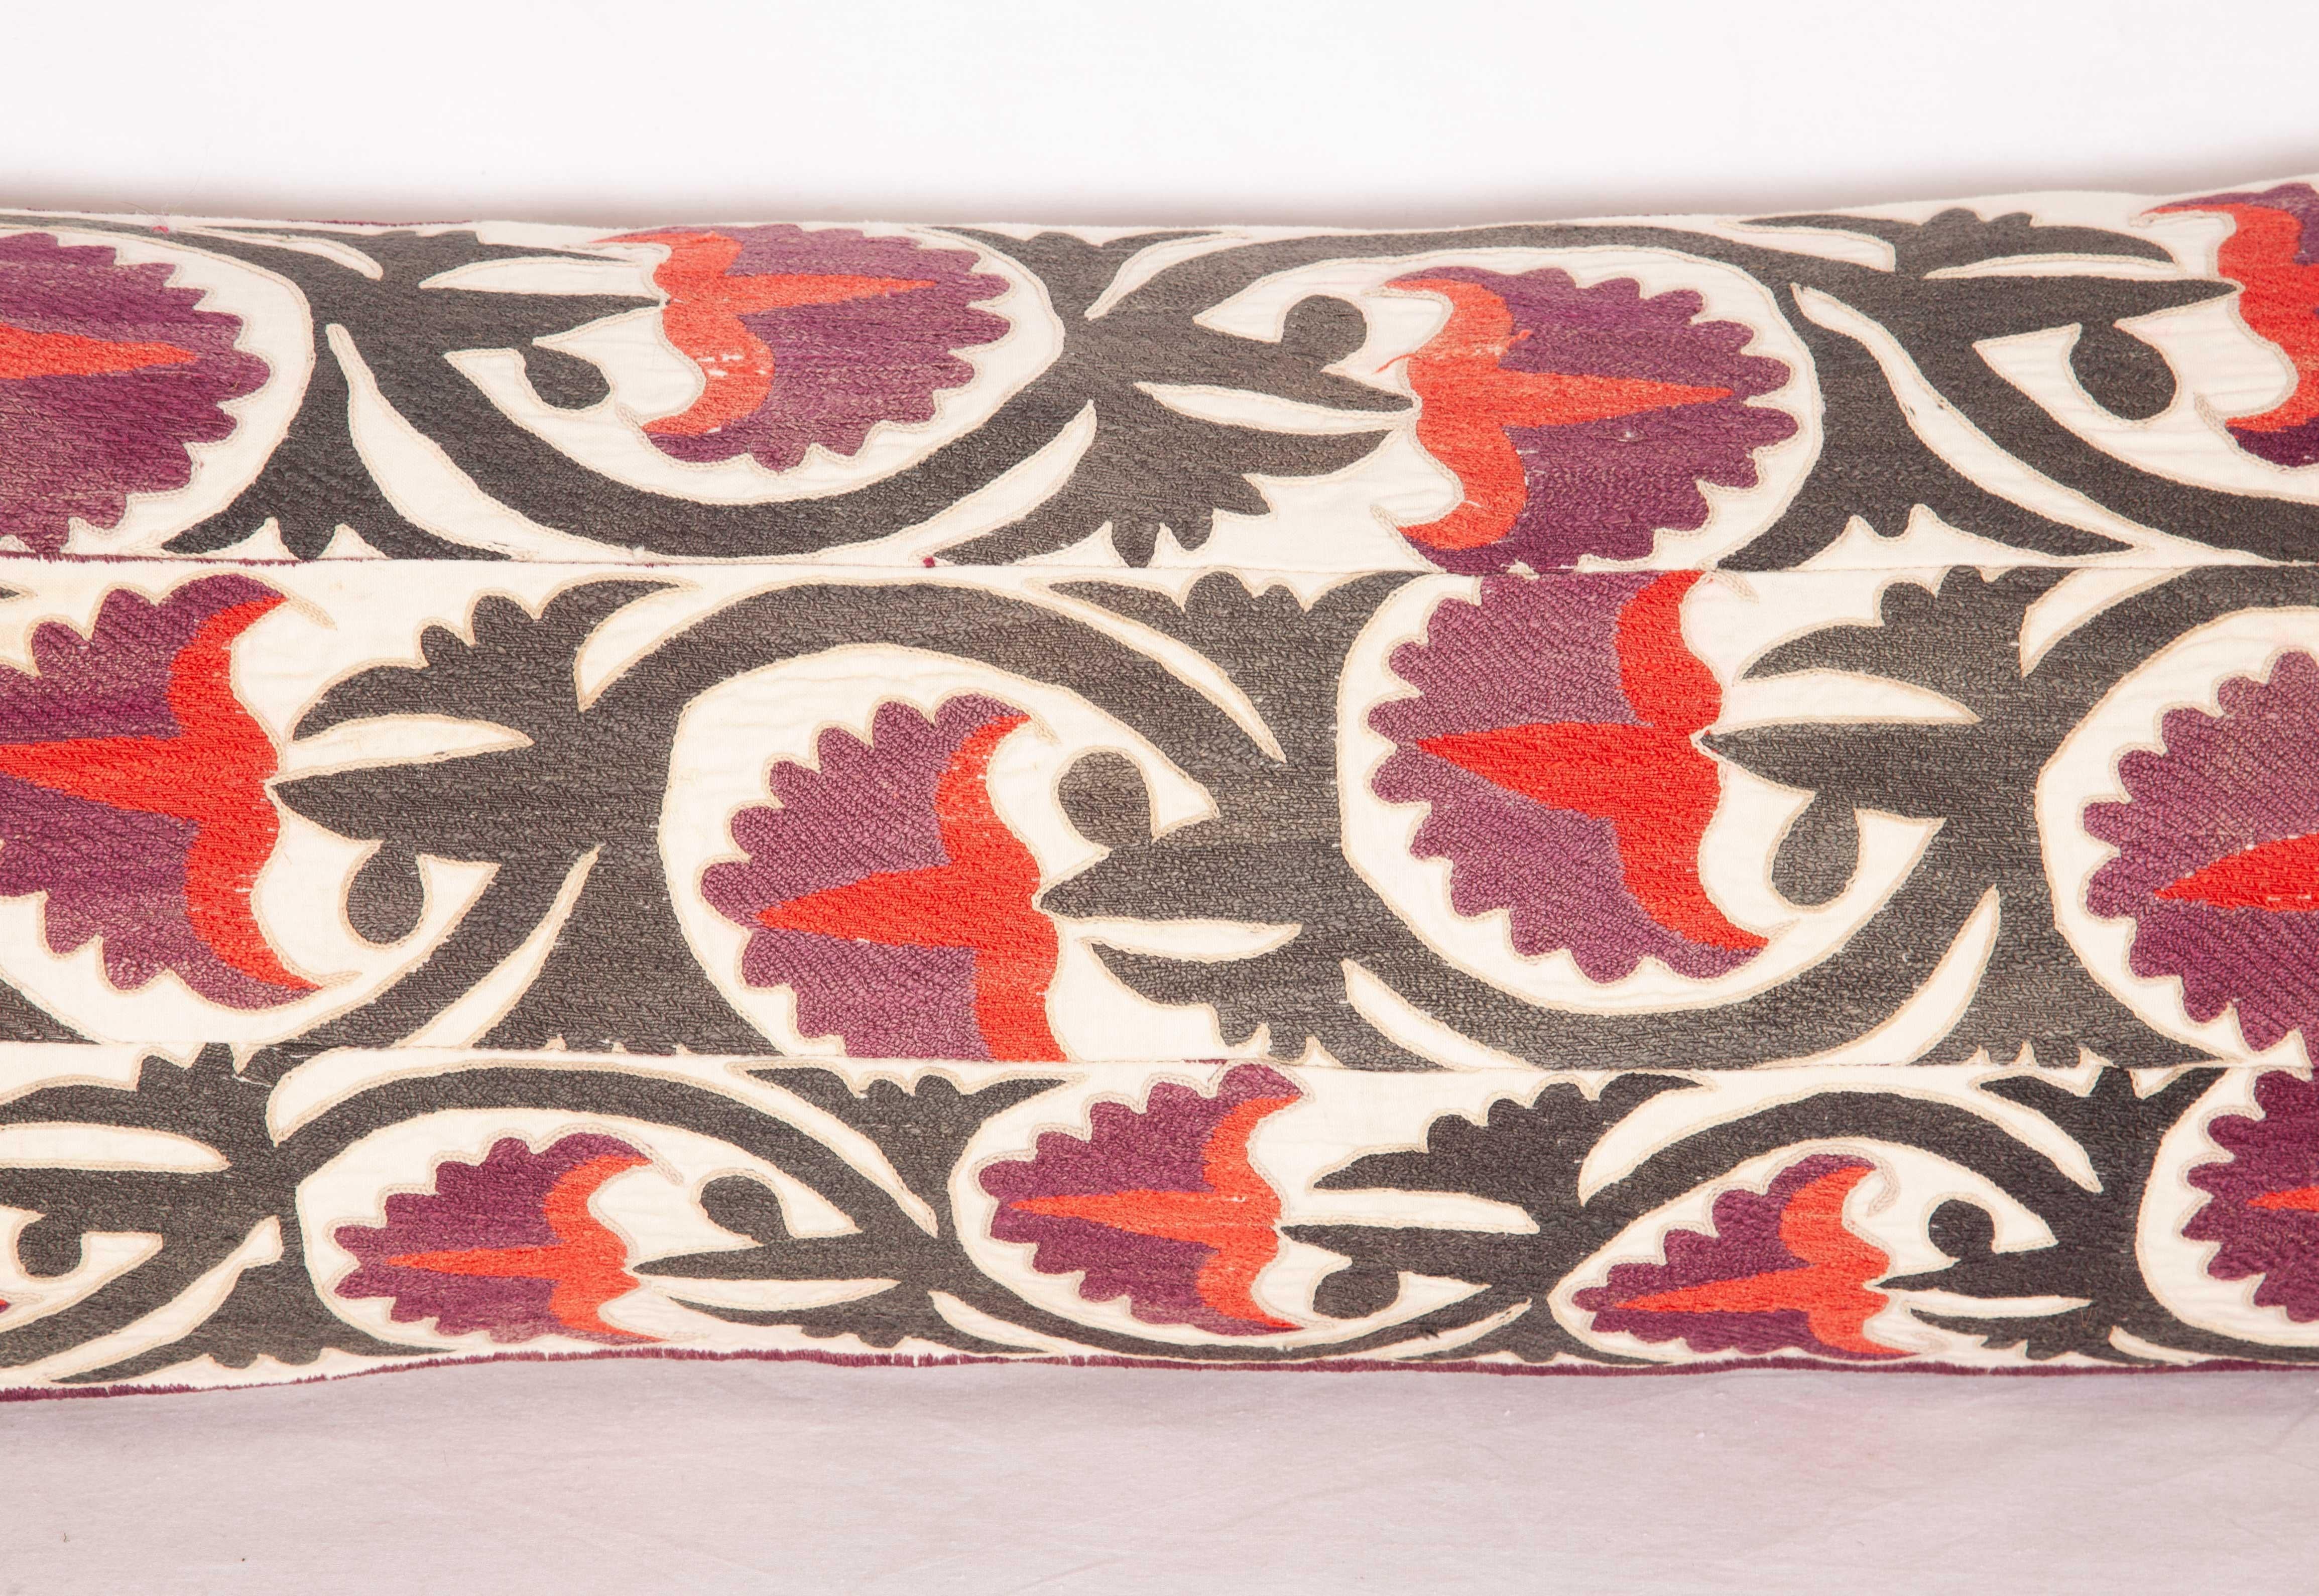 Embroidered Suzani Lumbar Pillow Case Made from an Early 20th Century Samarkand Suzani